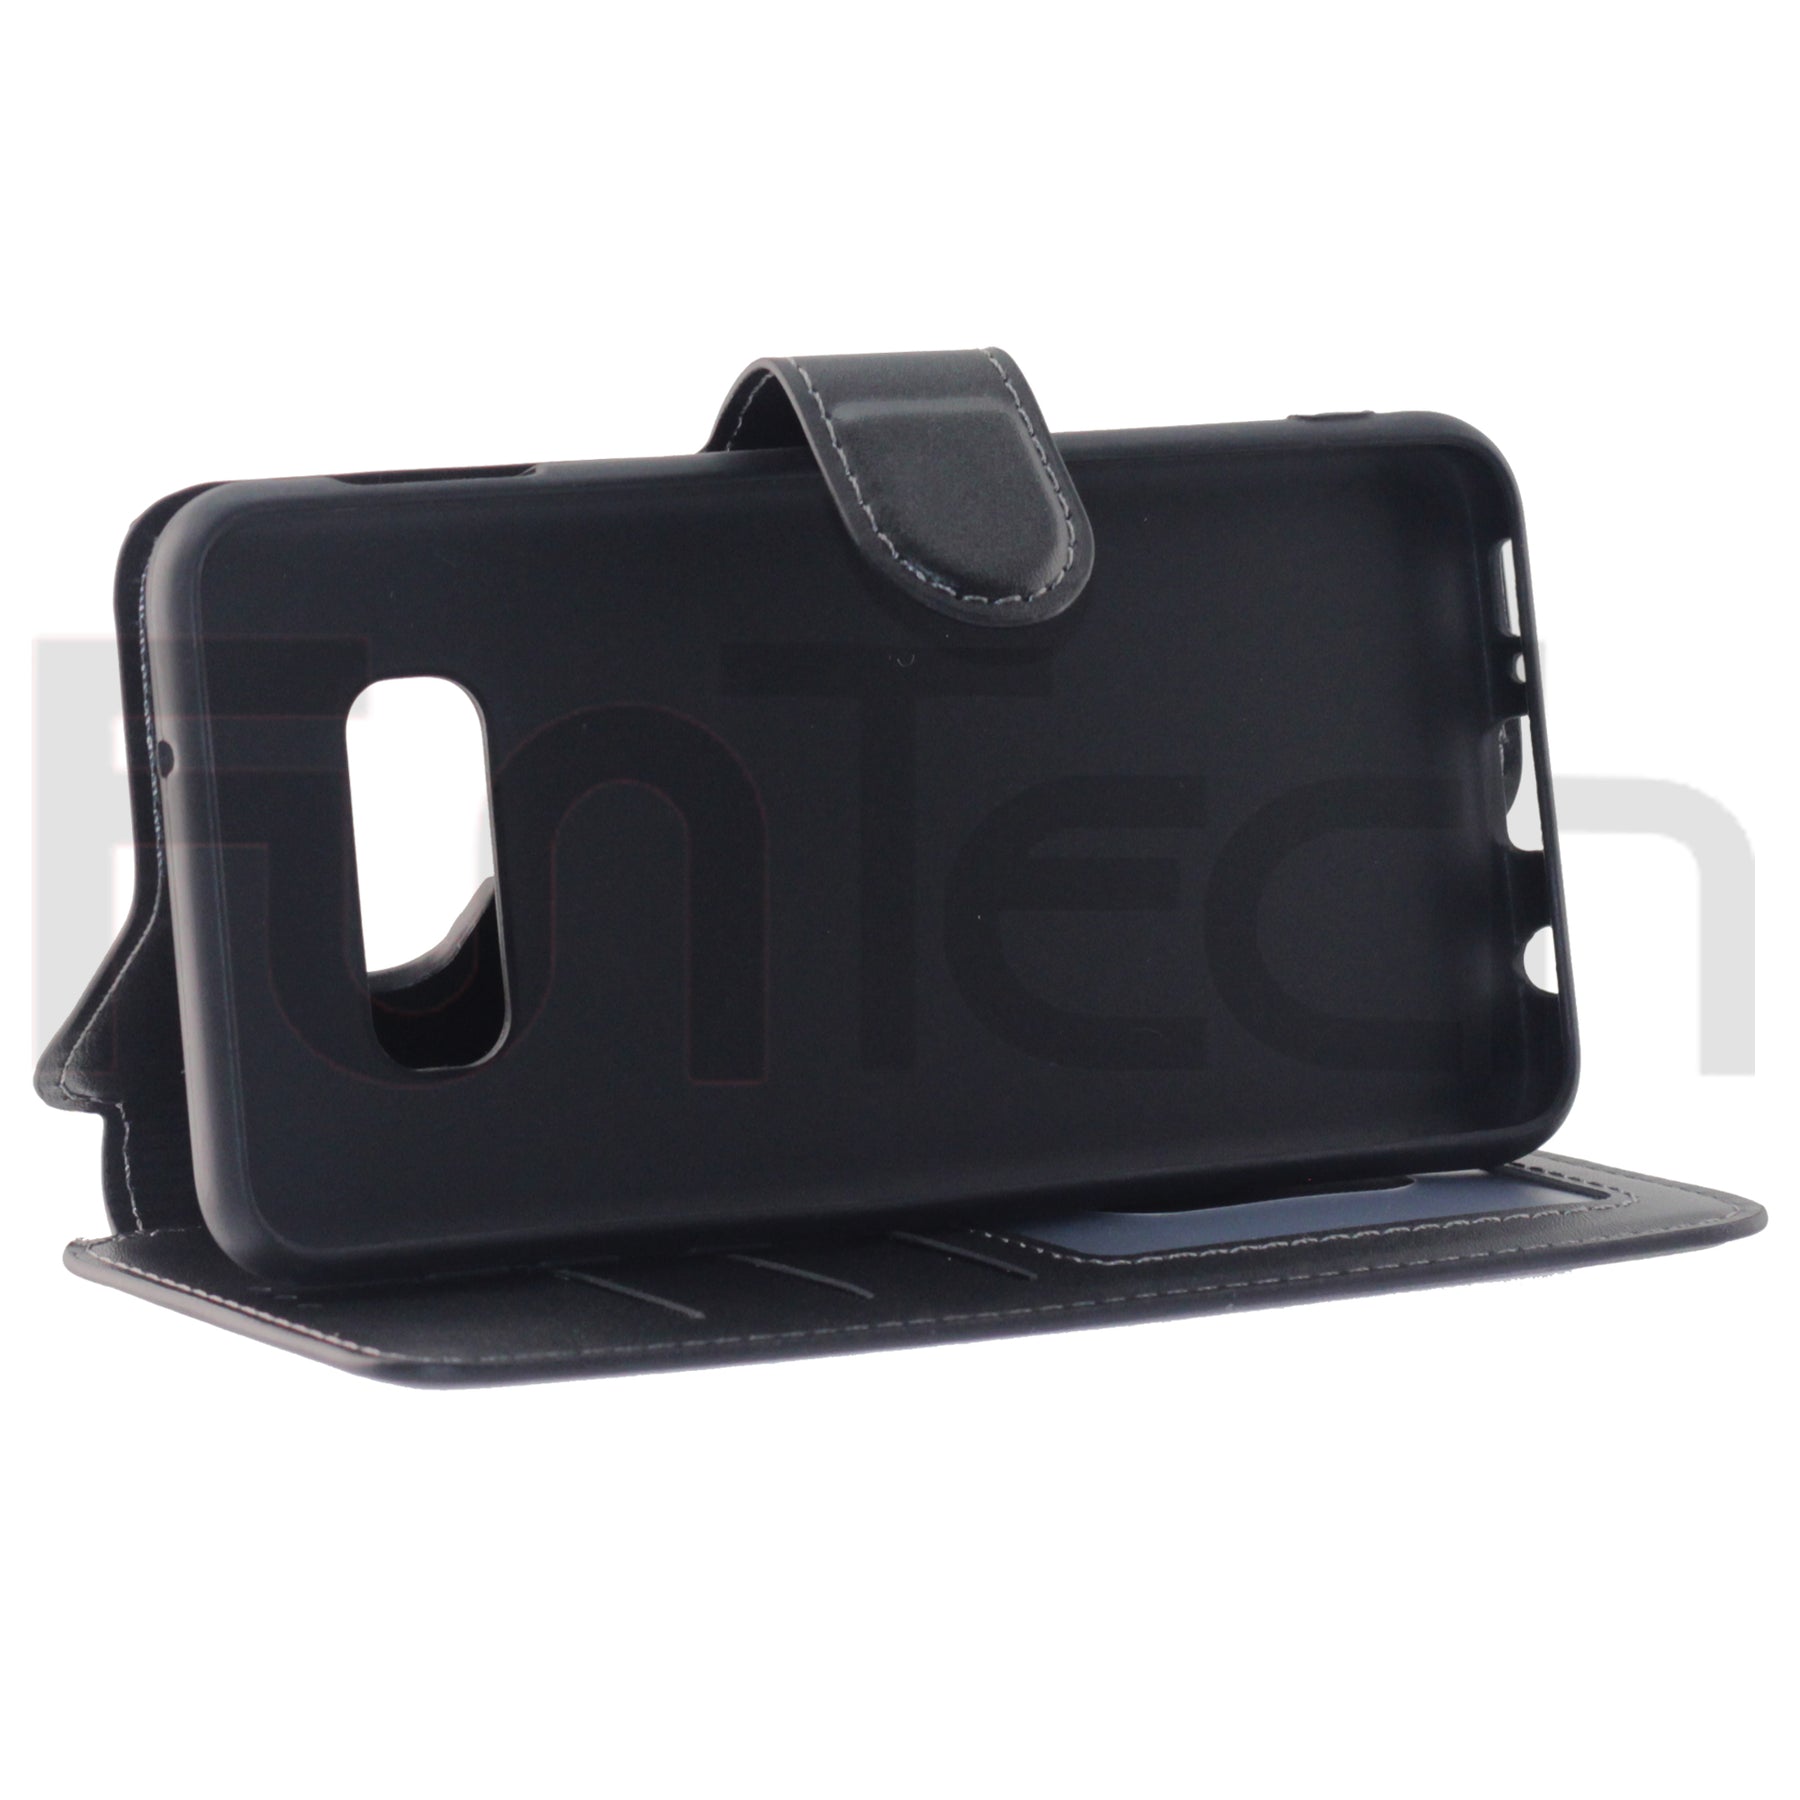 Samsung S10 E, Leather Wallet Case, Color Black.